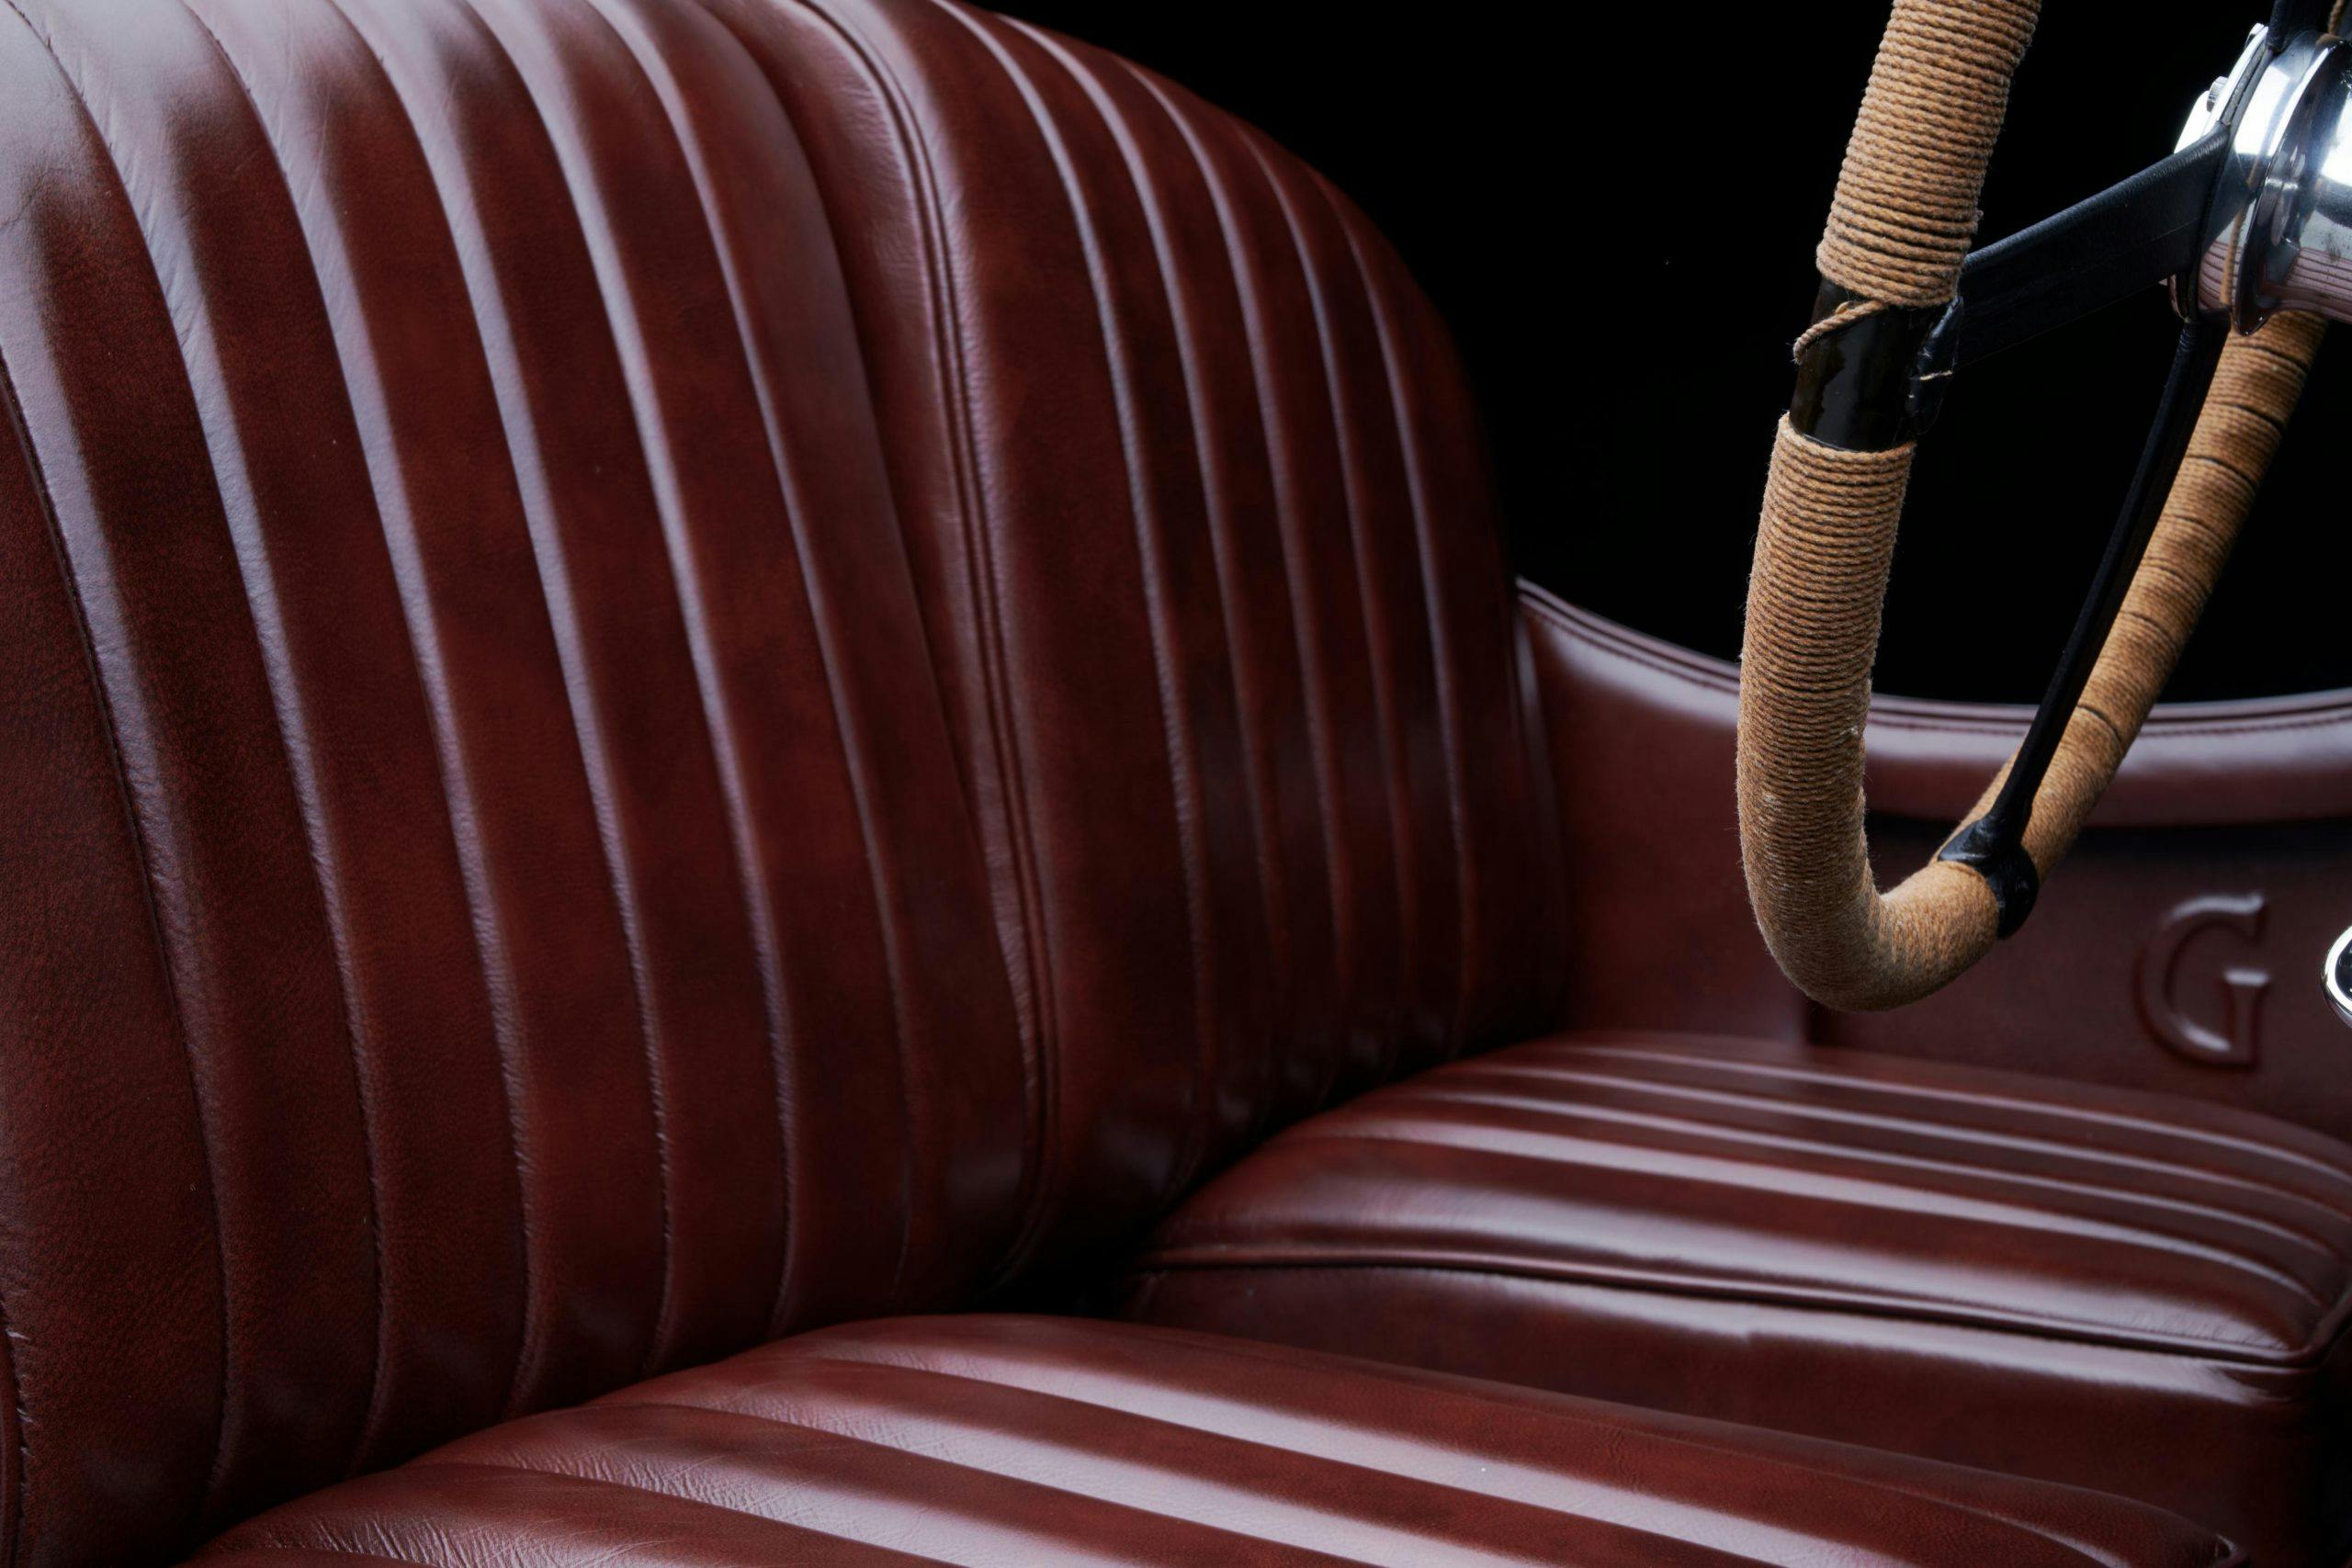 1935 Godsal Sports Tourer interior leather